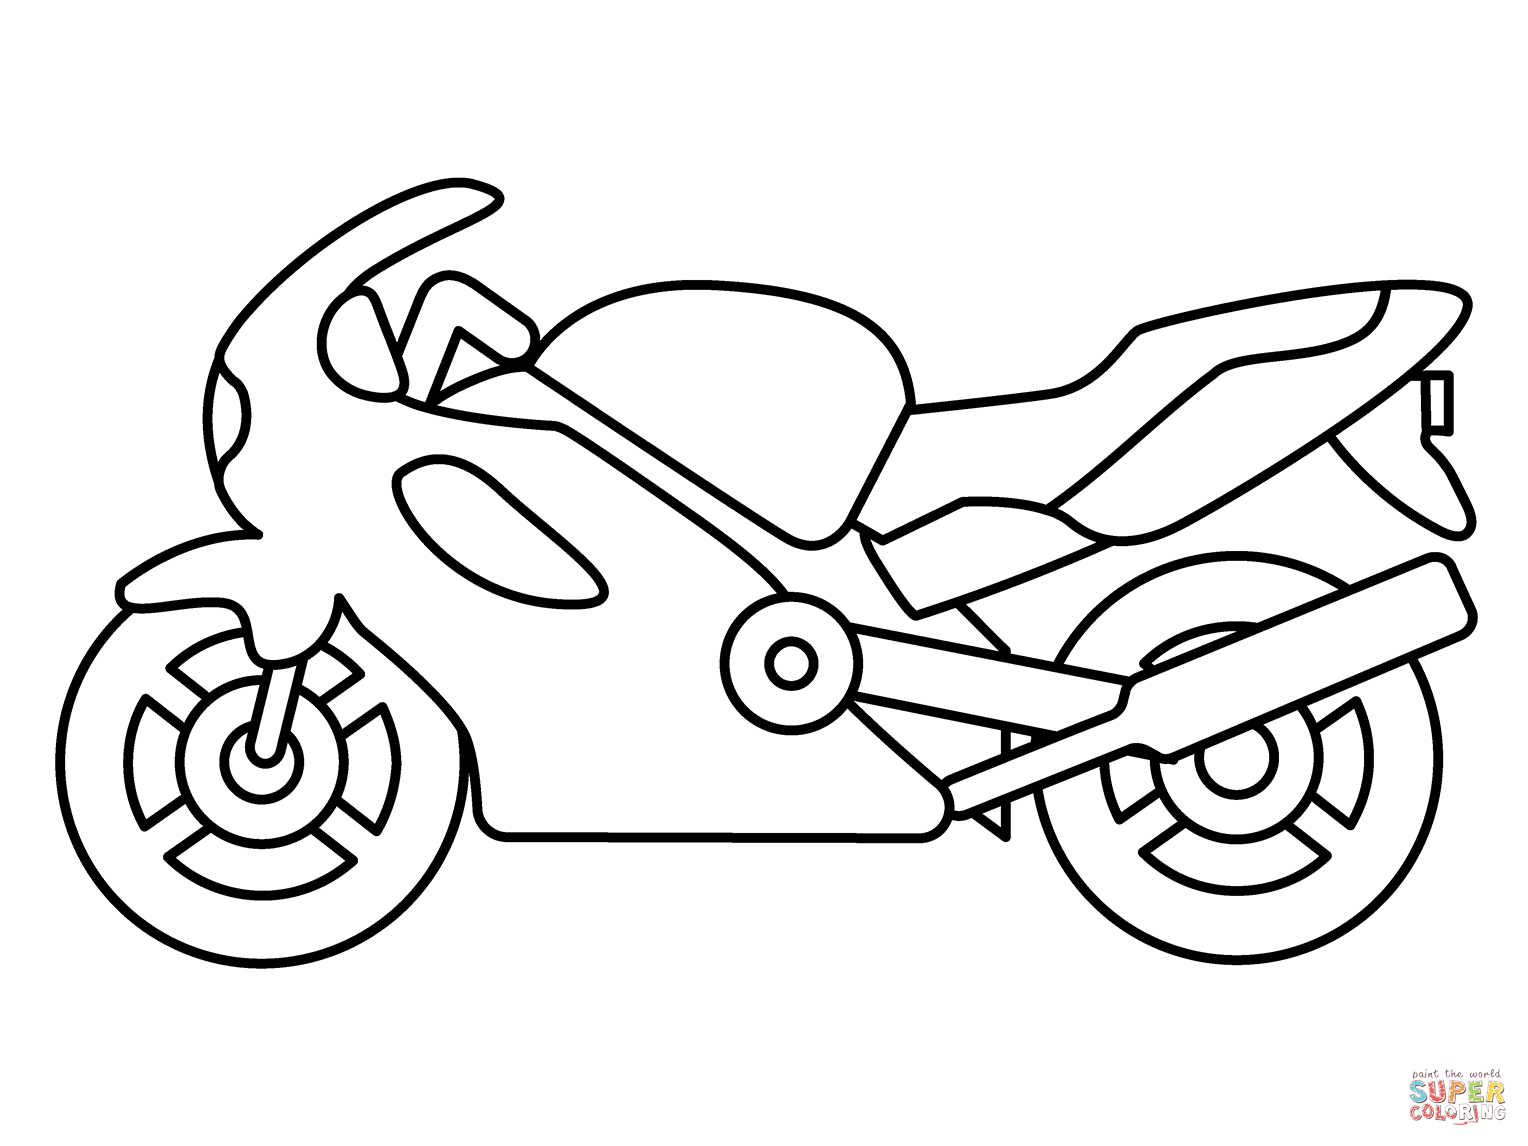 Motorcycle emoji coloring page free printable coloring pages